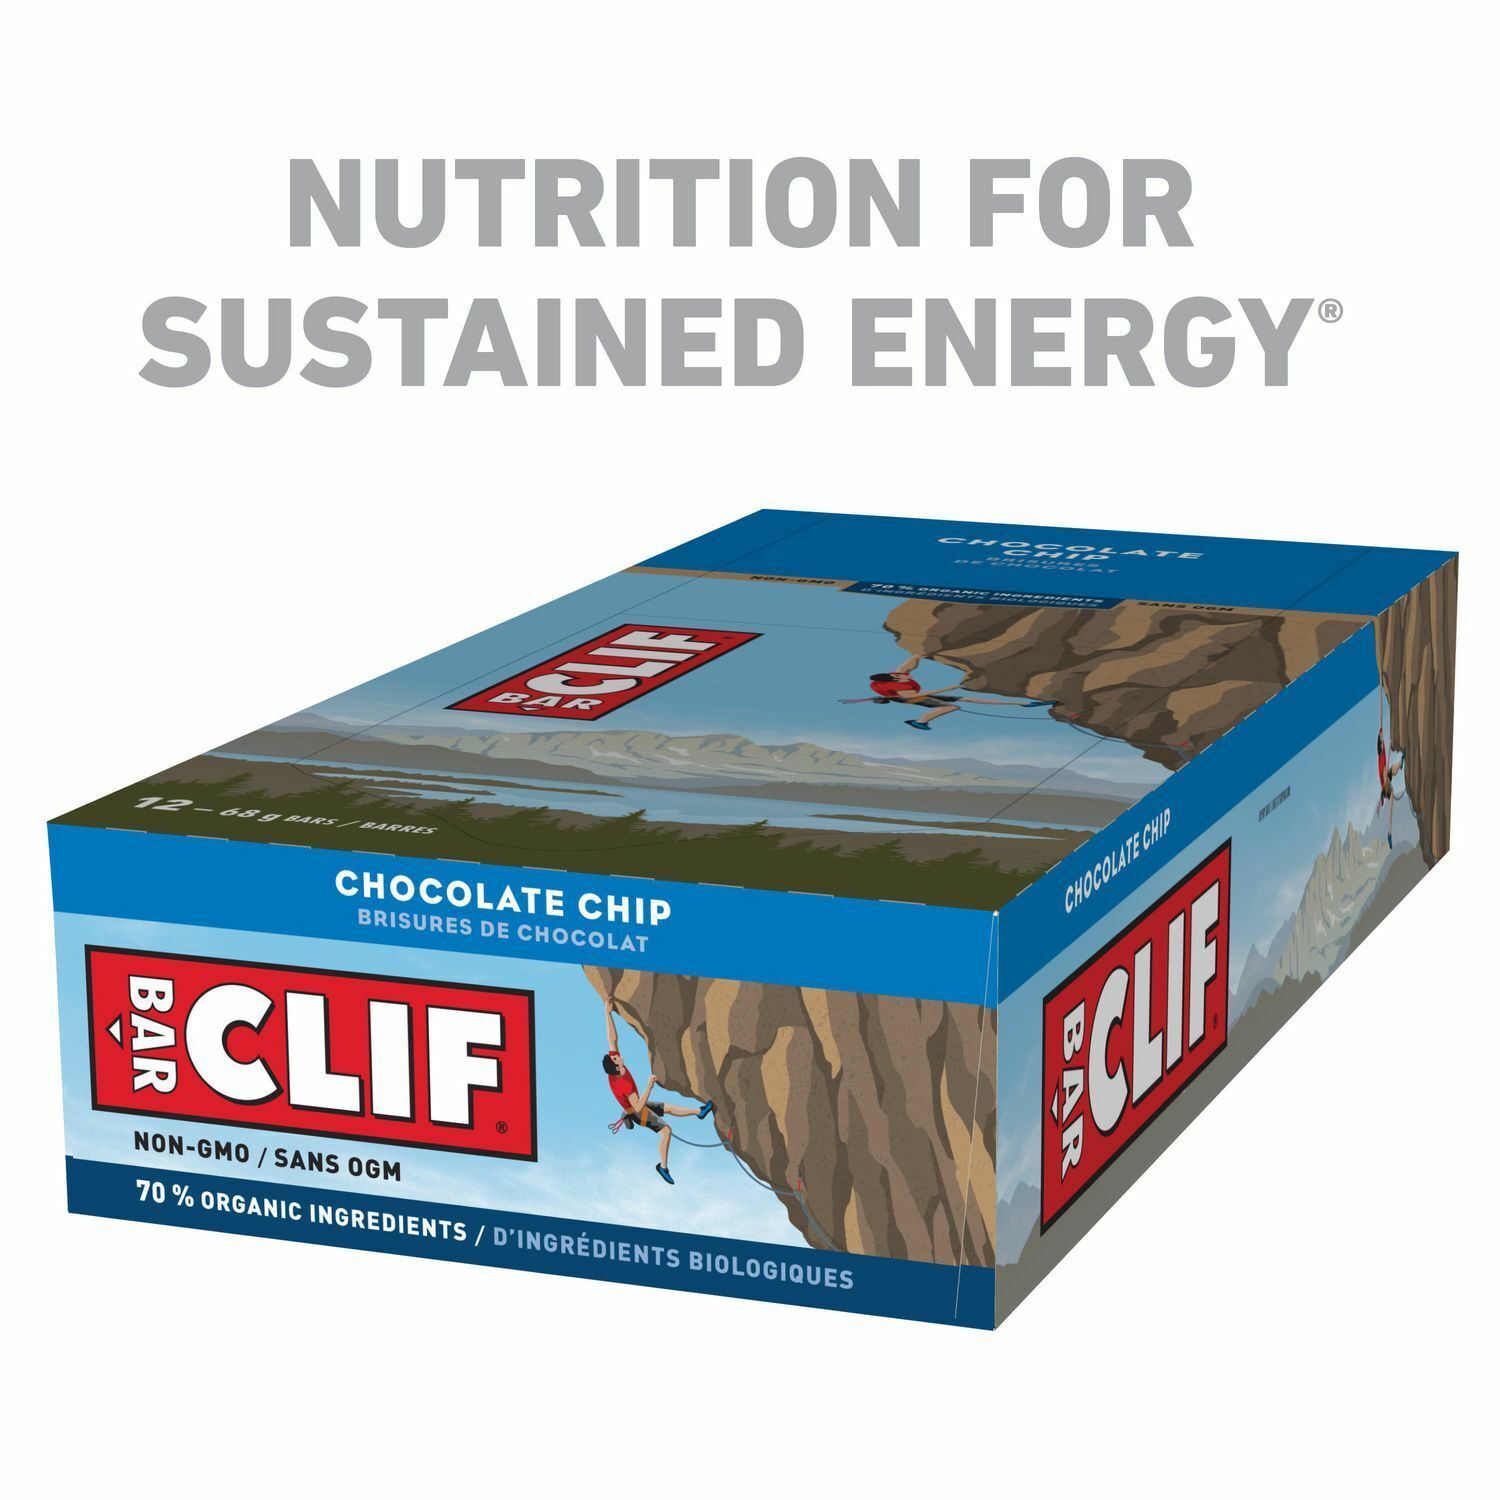 Box of 12 CLIF Bar Chocolate Chip Energy Bars 68g / 2.40 oz Each Free Shipping - $44.51